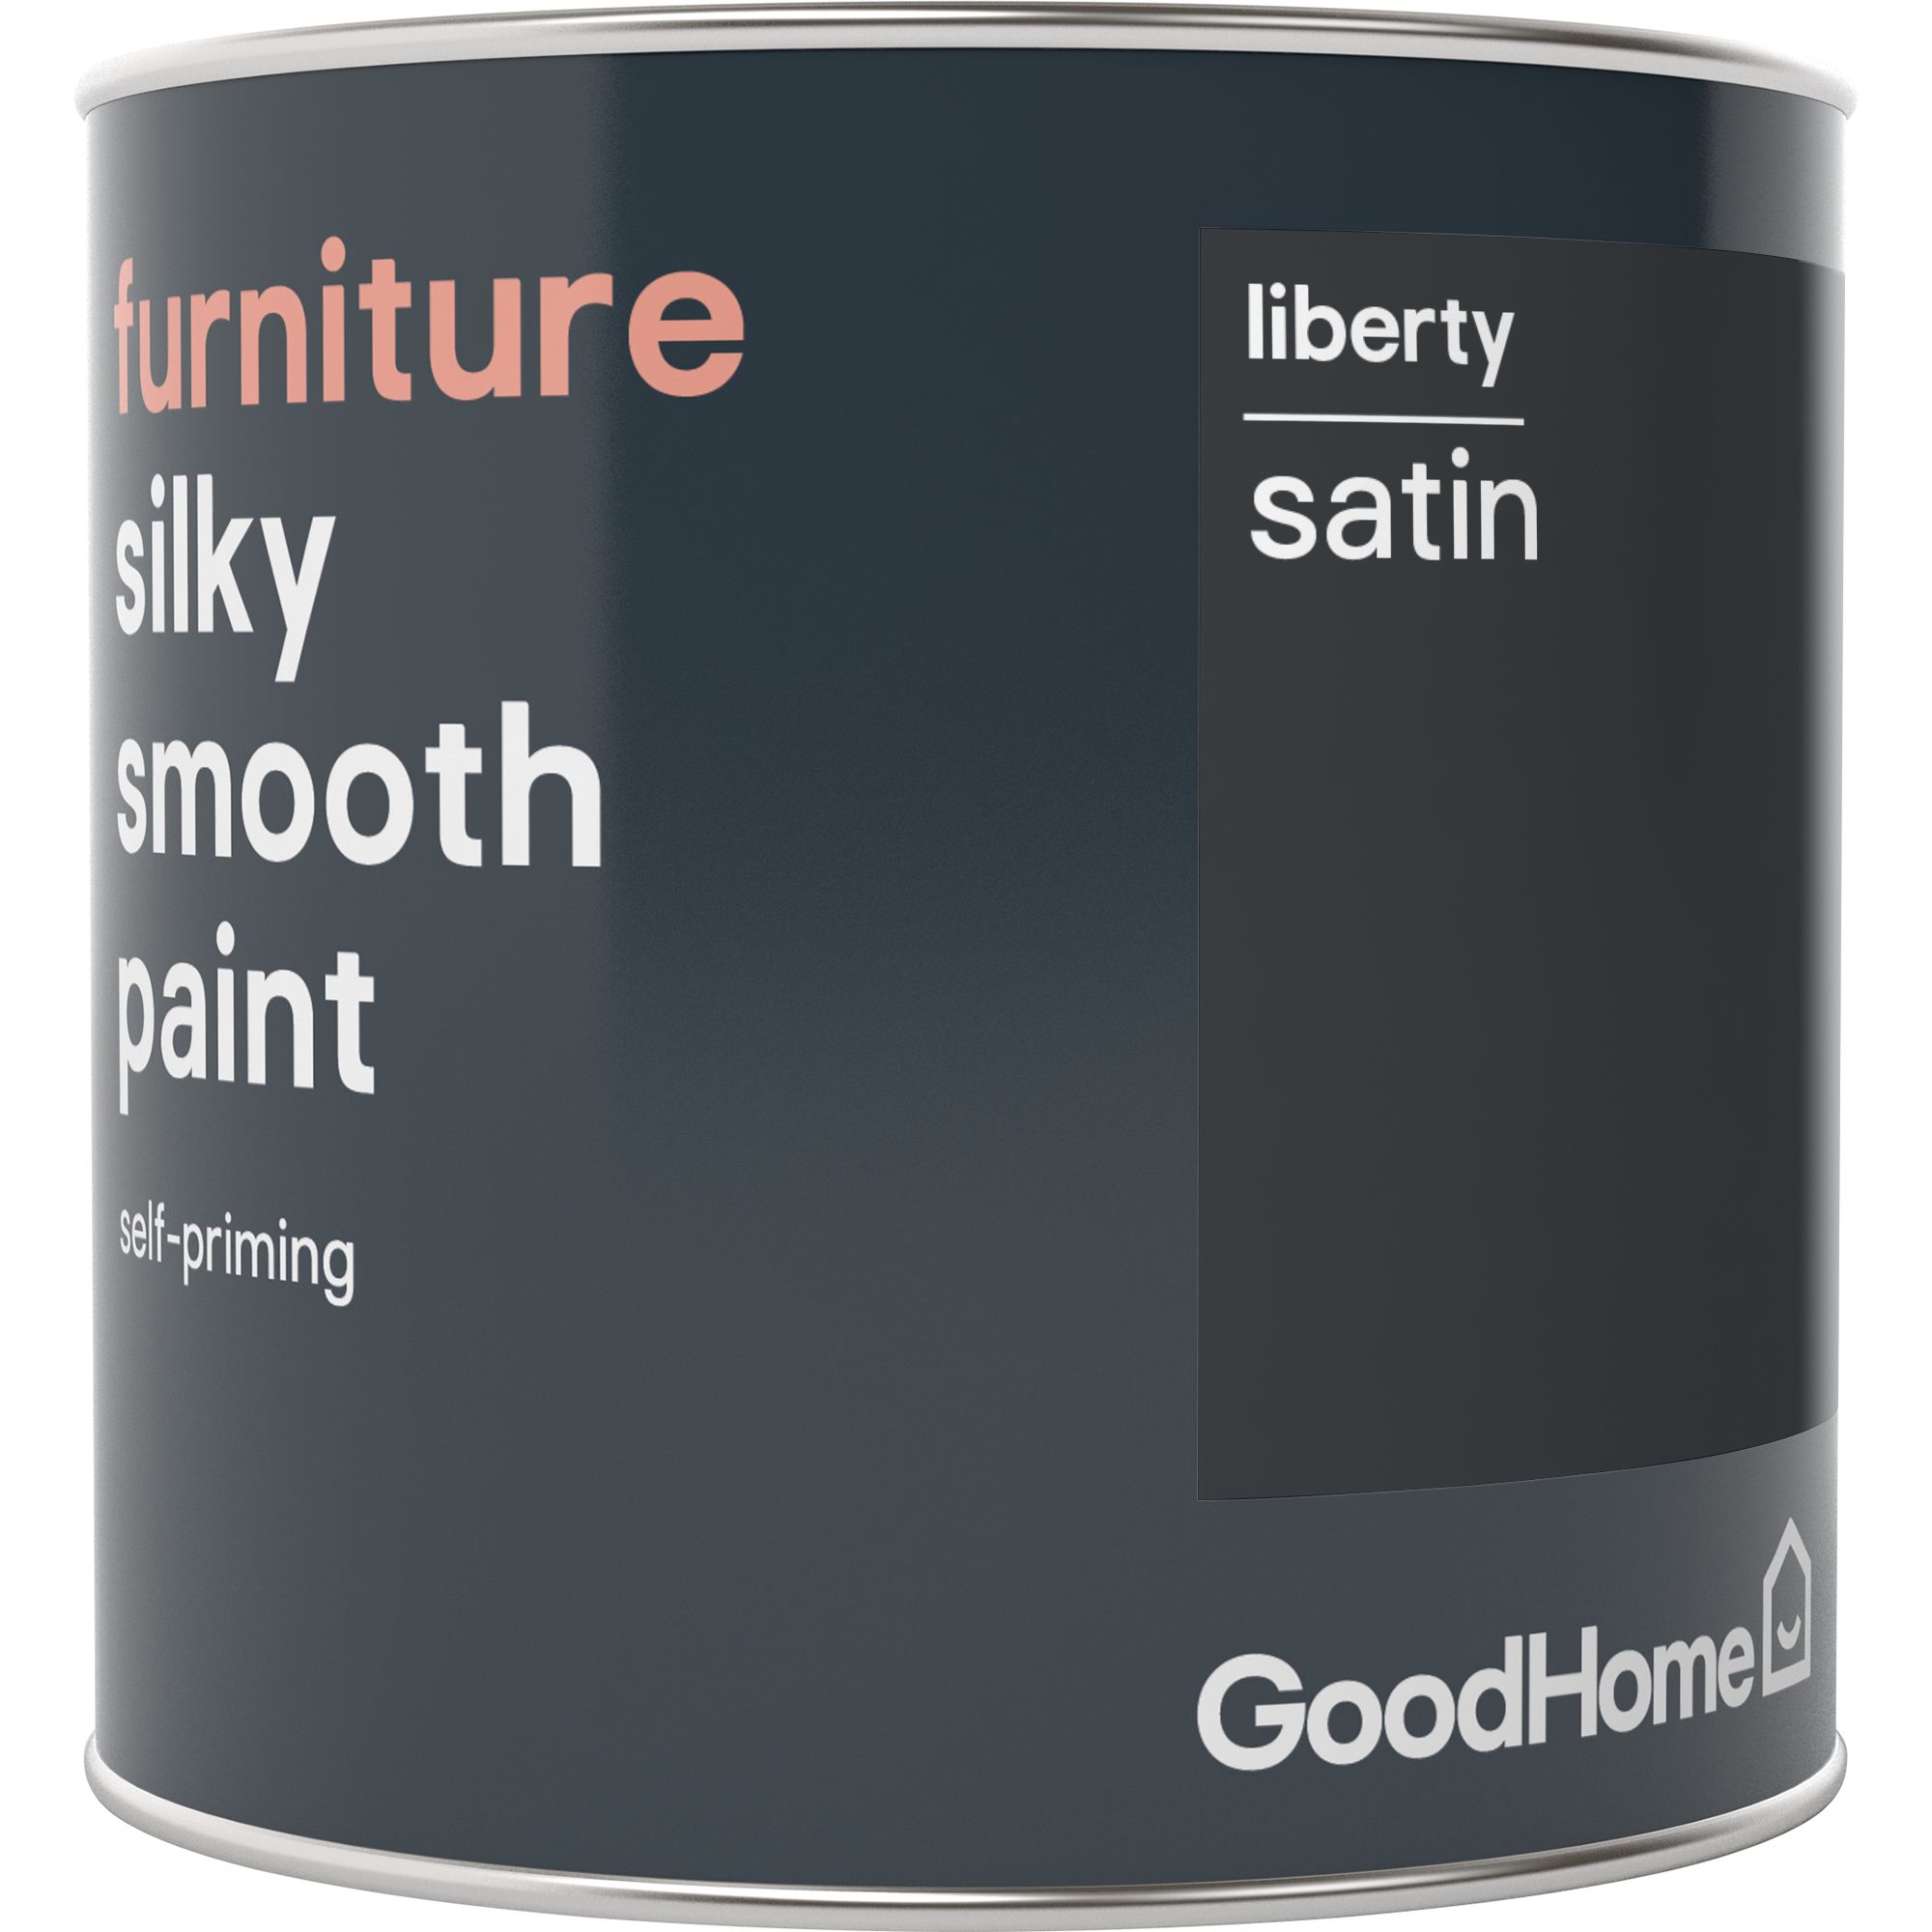 GoodHome Liberty Satin Furniture paint, 500ml